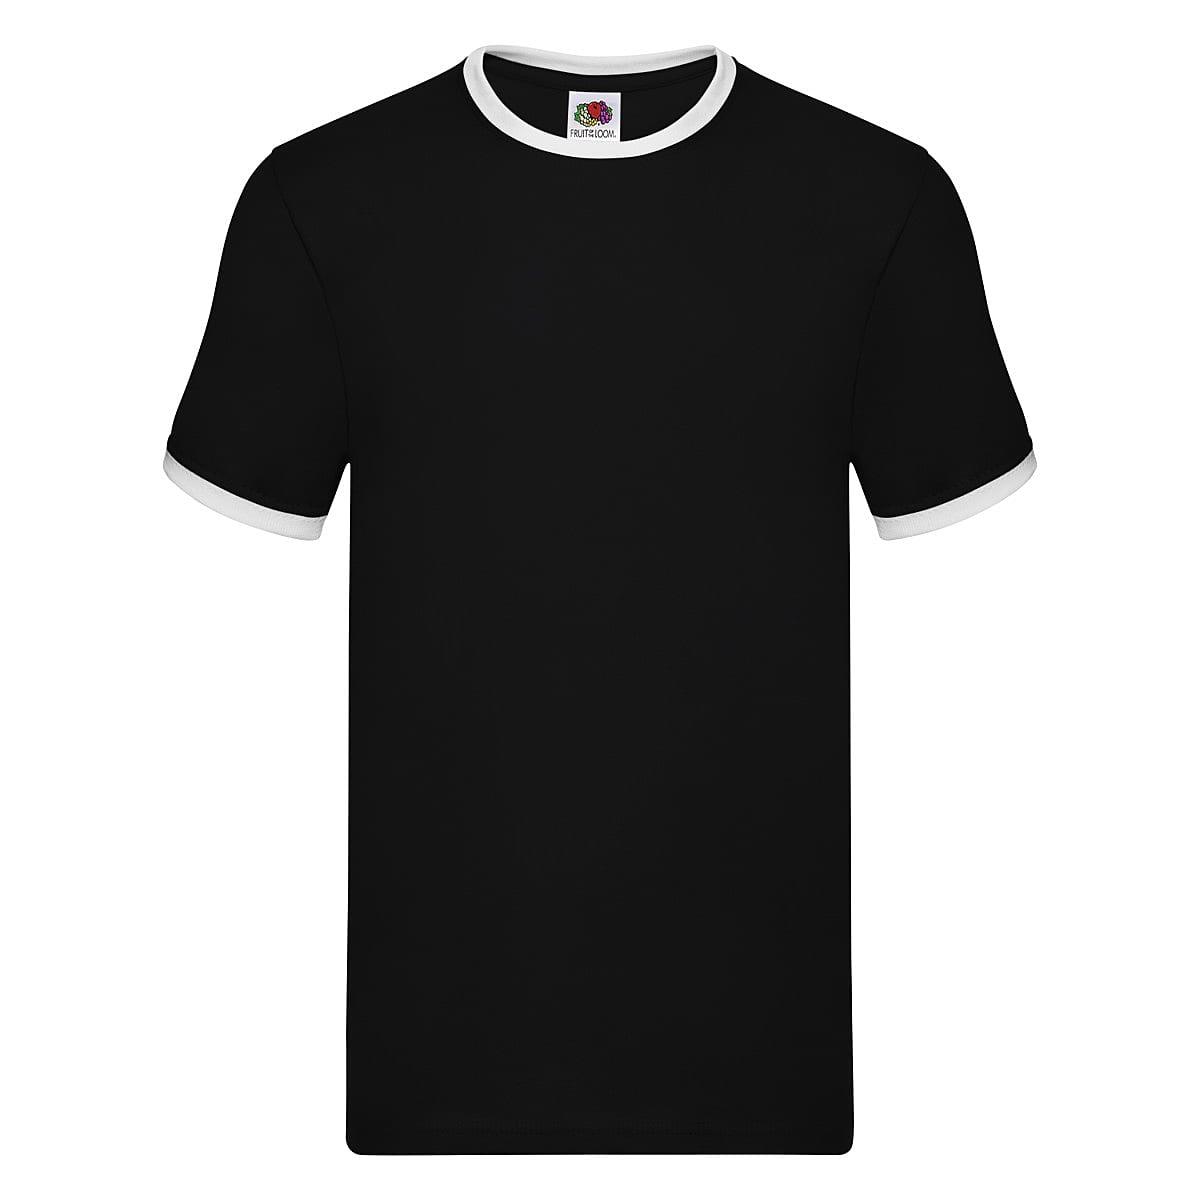 Fruit Of The Loom Ringer T-Shirt in Black / White (Product Code: 61168)